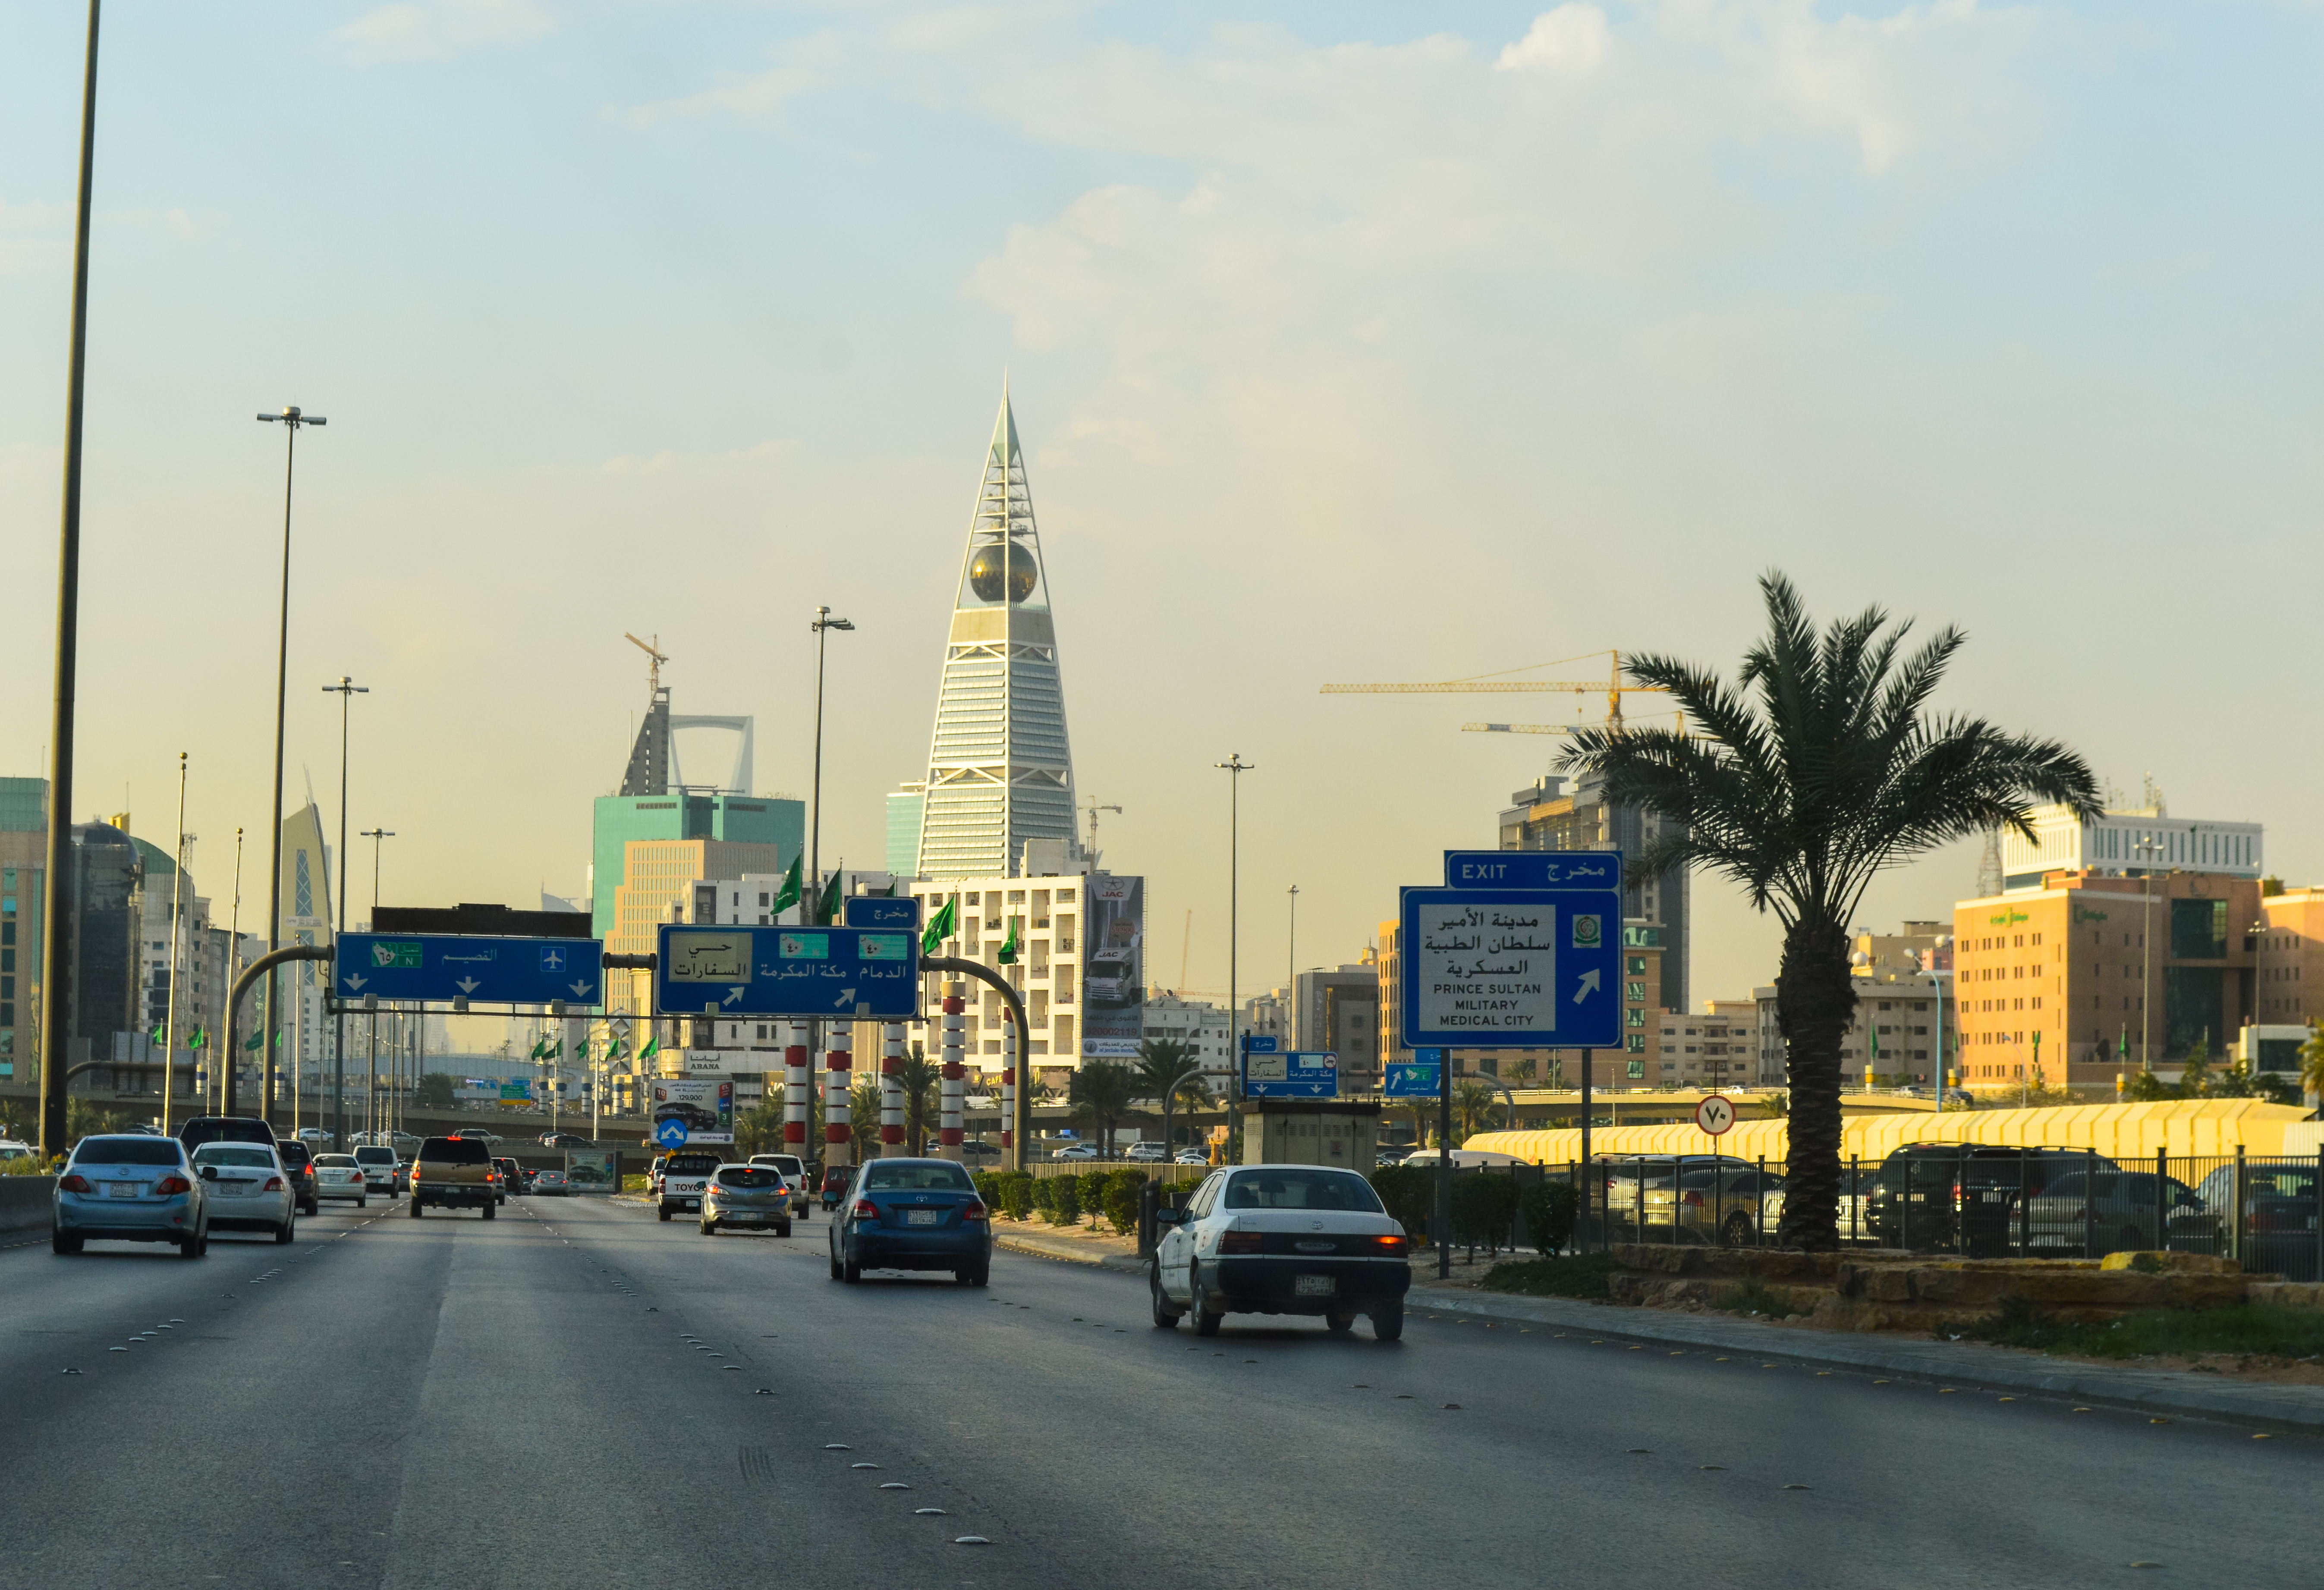 King Fahd Road in Saudi Arabia